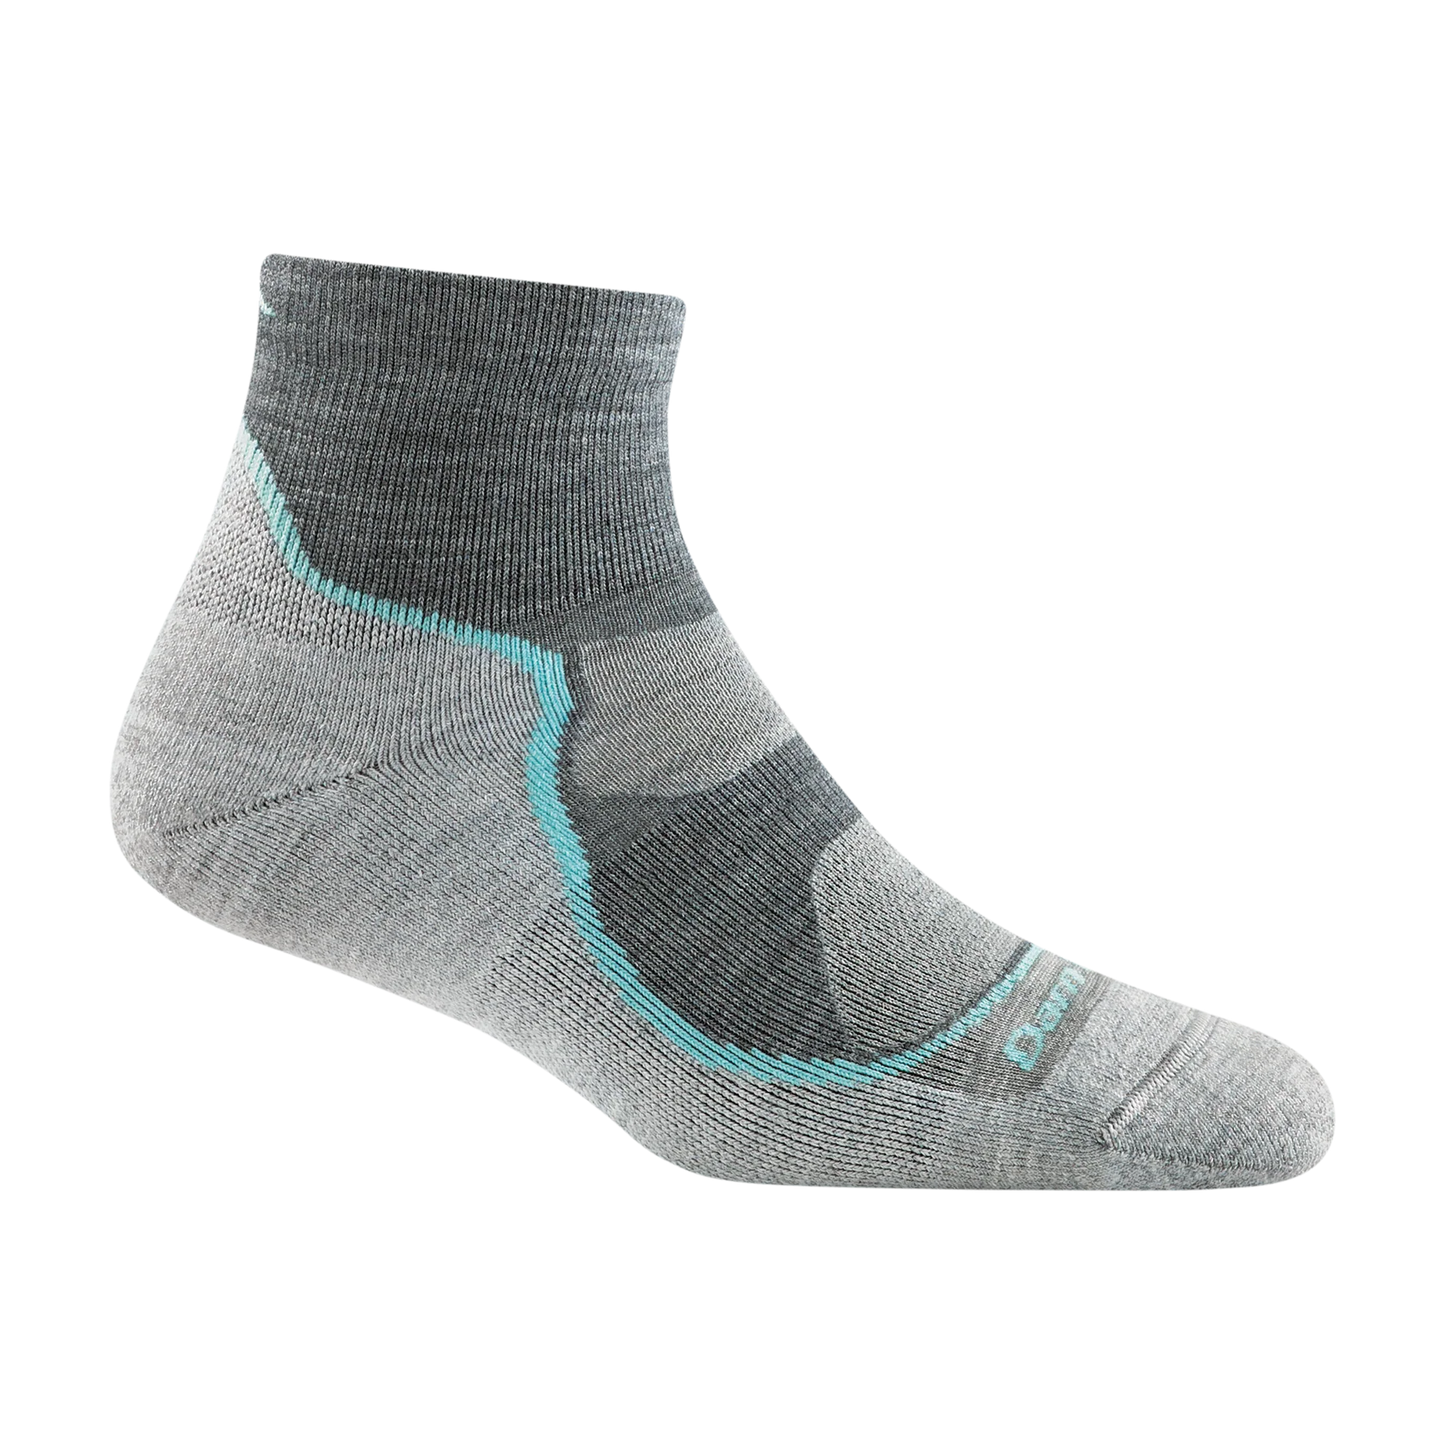 Darn Tough Women's 1/4 Length Lightweight Hiker Socks - Slate Grey